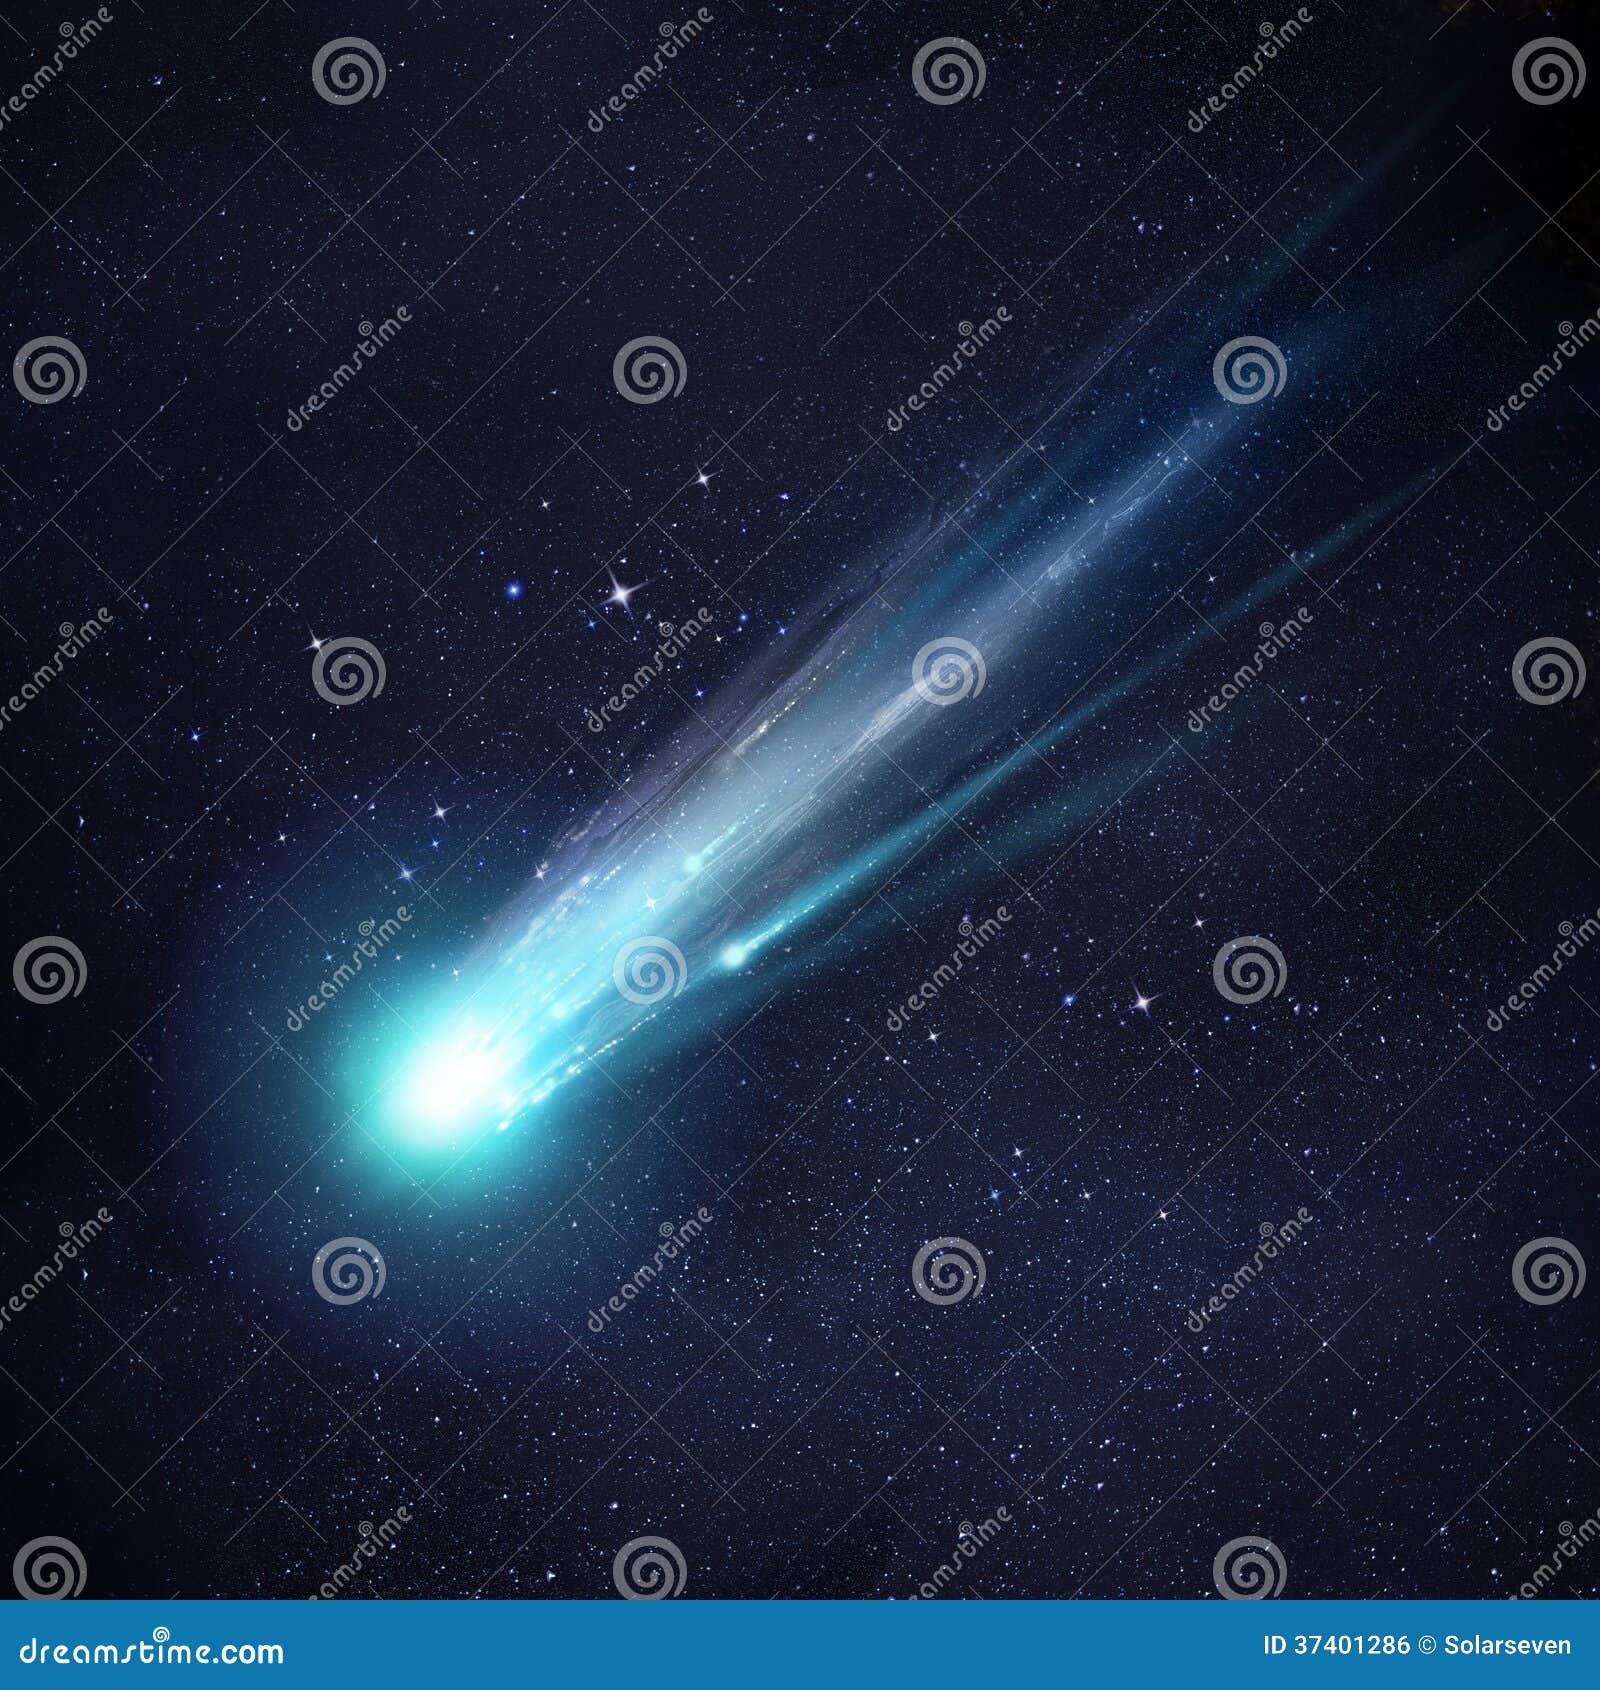 a great comet